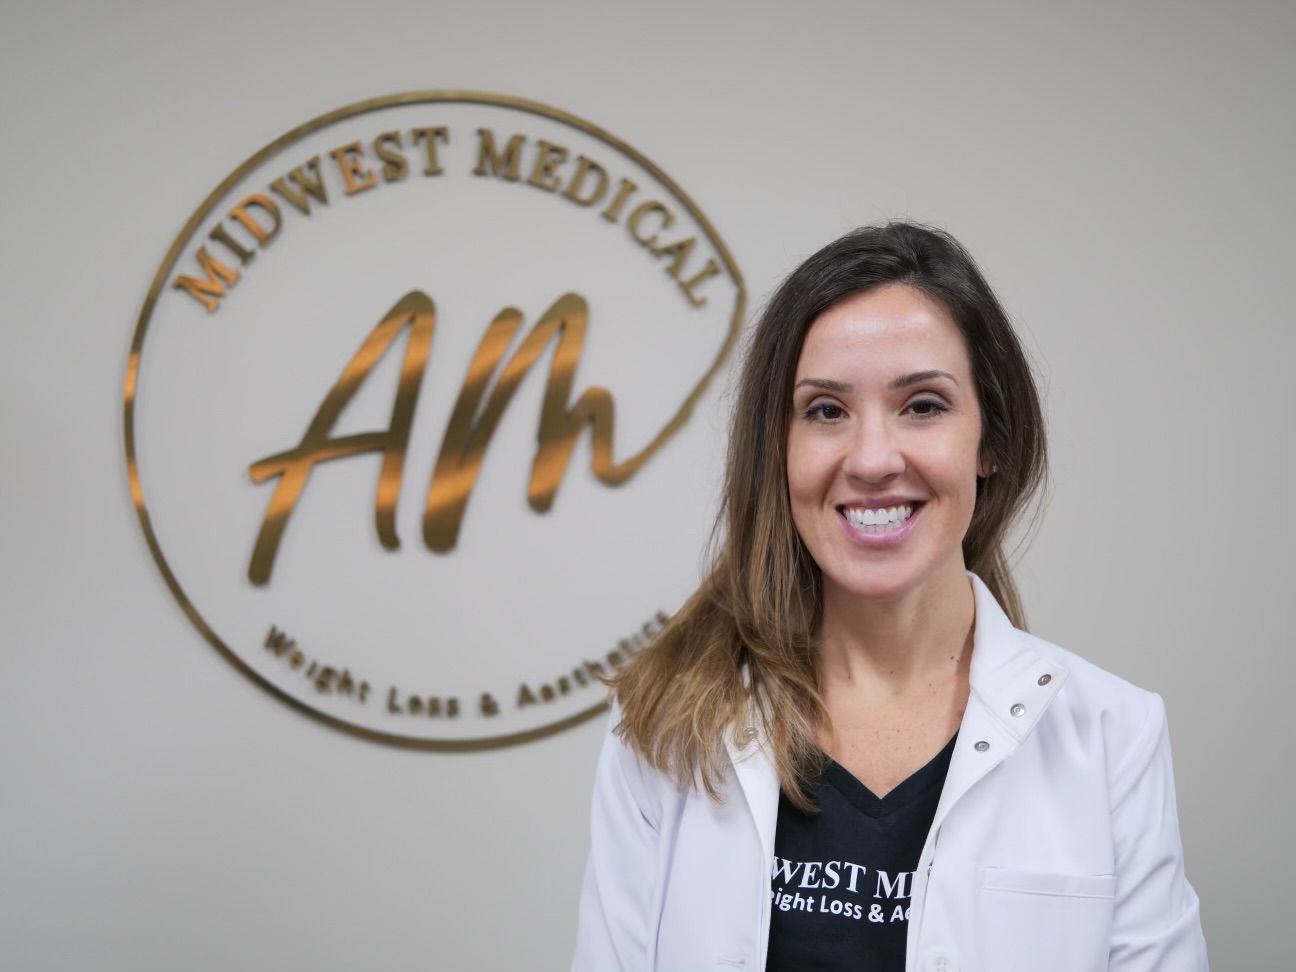 Angela Dugo-Munizzi — Orland Park, IL — Midwest Medical Weight Loss & Aesthetics